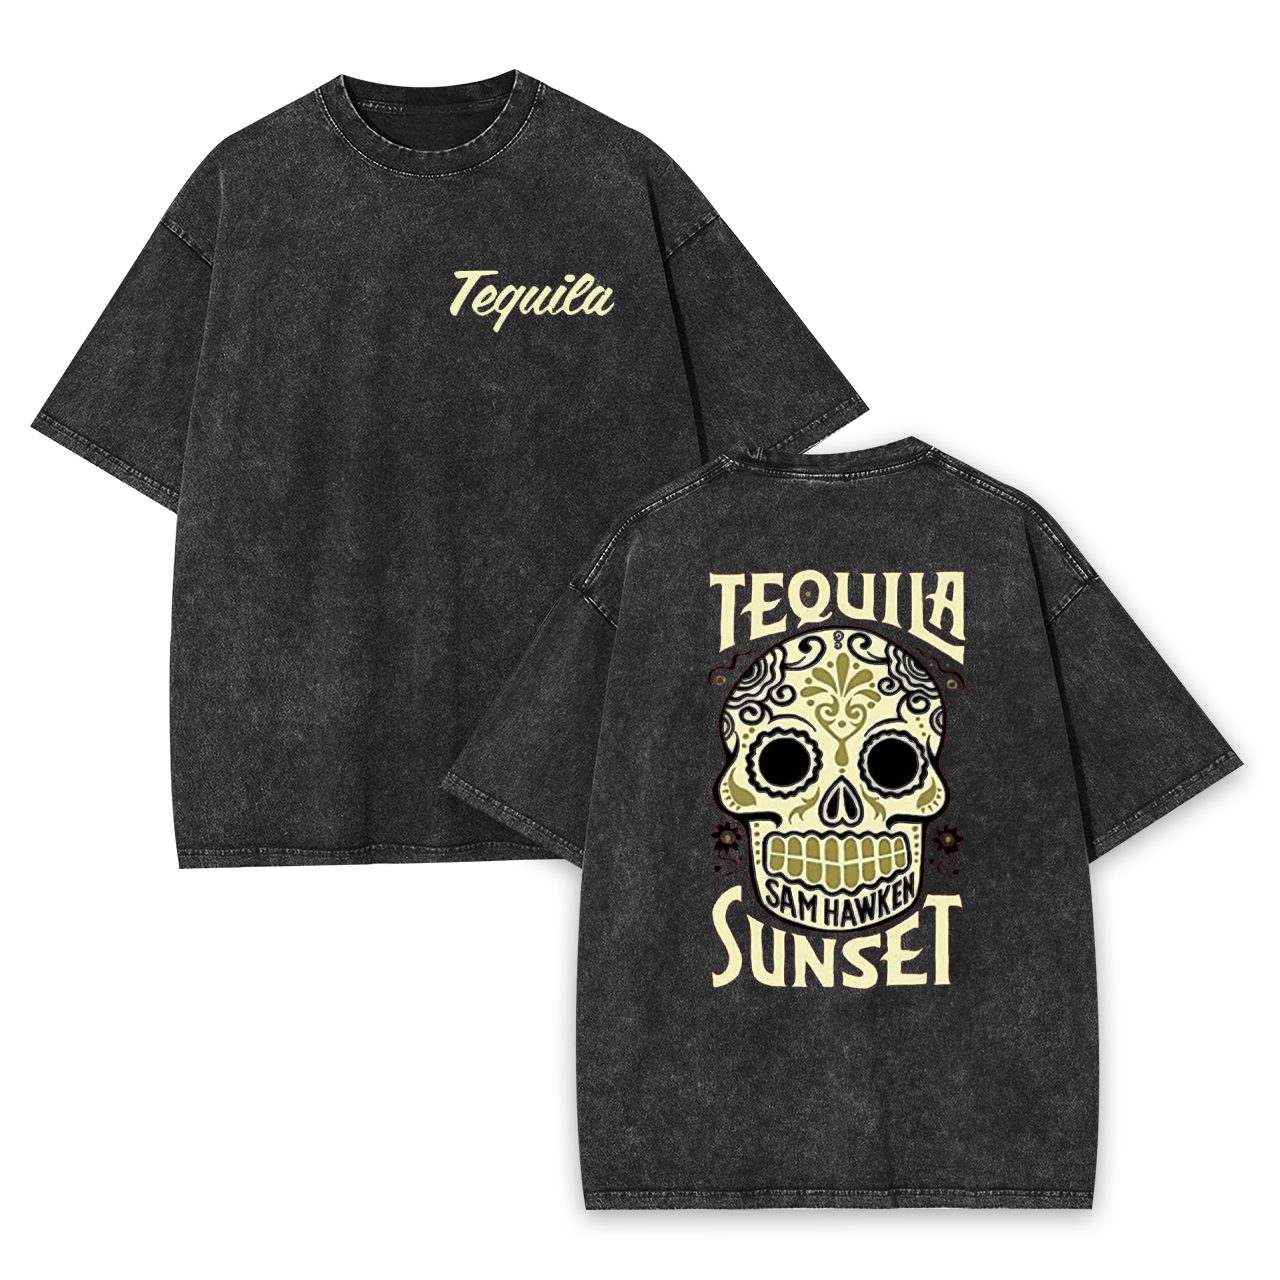 Tequila Sunset Garment-dye Tees